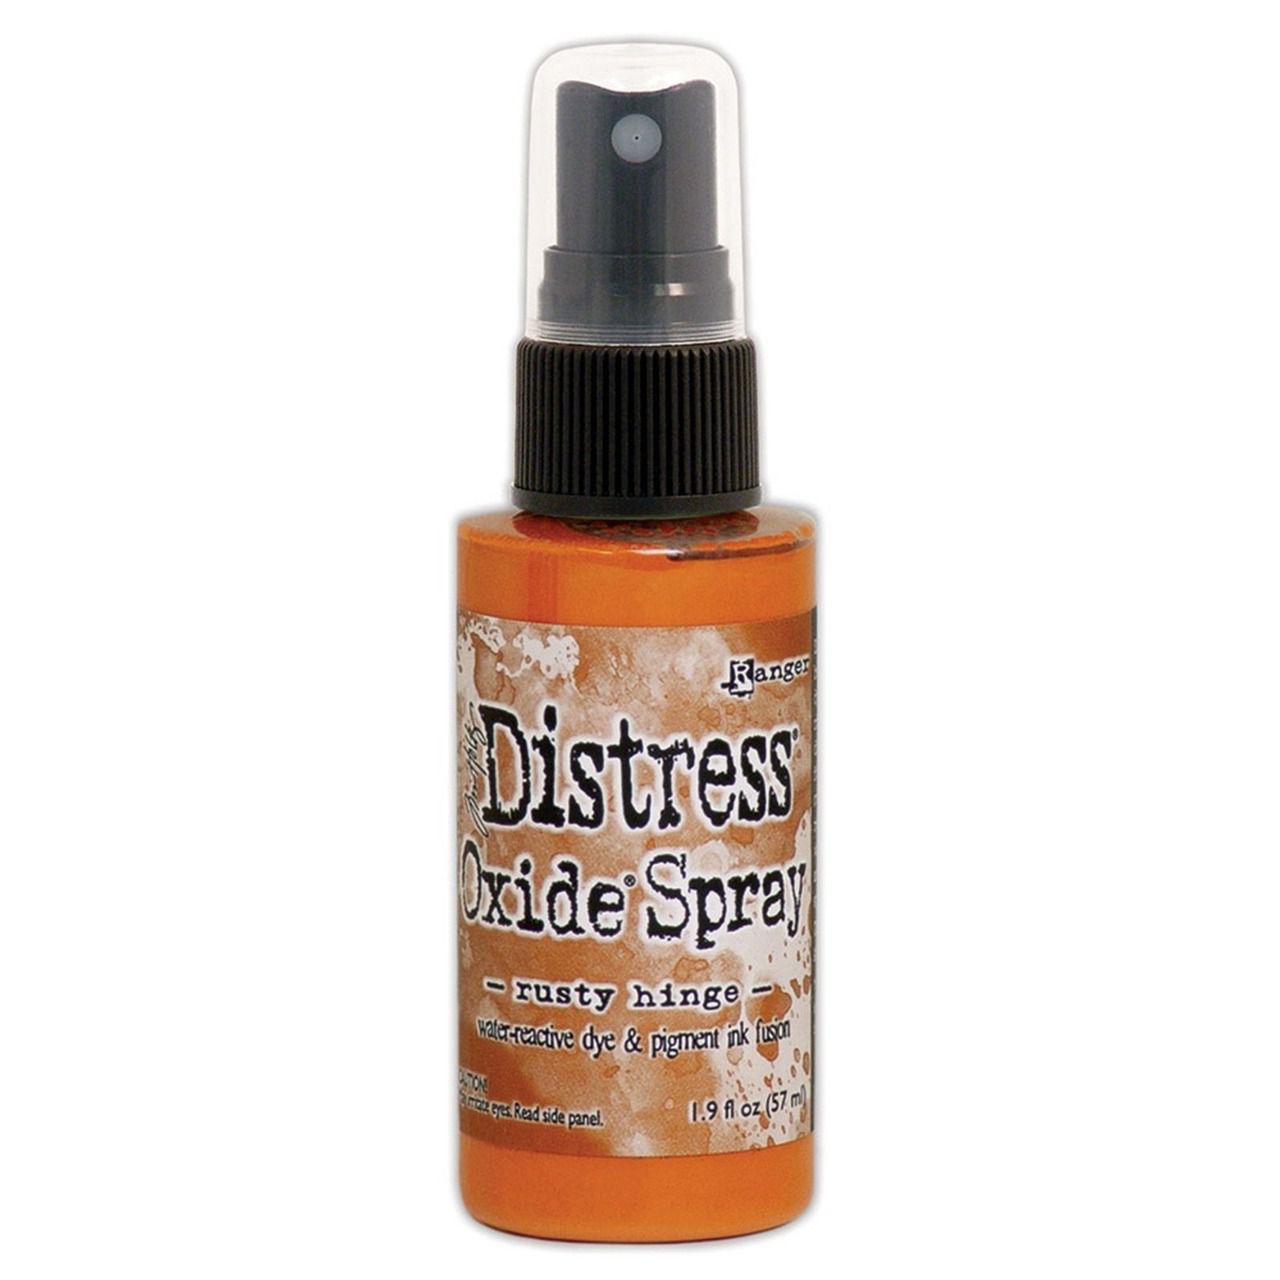 Distress spray oxide : Rusty hinge